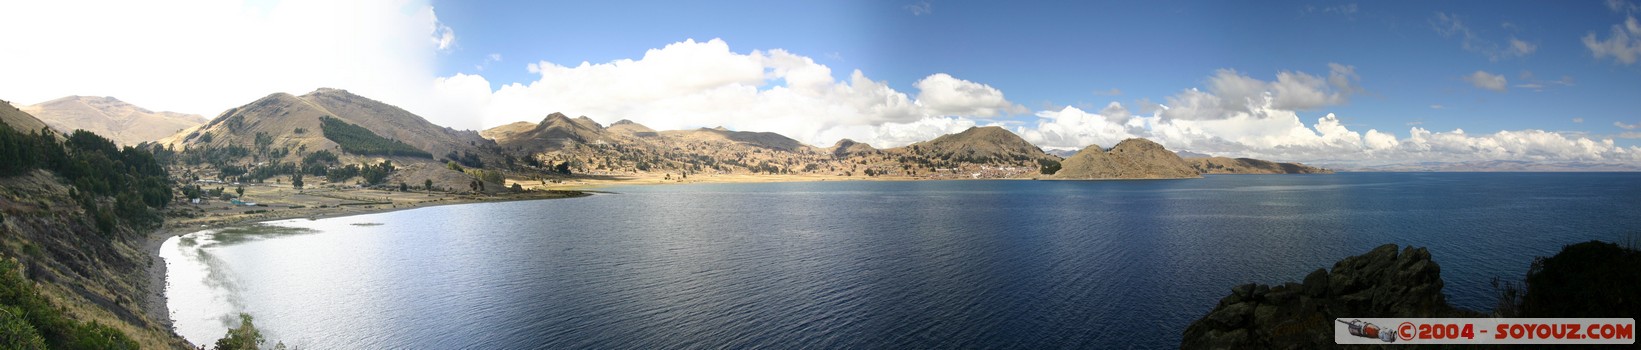 Lac Titicaca - Bahia de Copacabana - panoramique
Mots-clés: panorama Lac